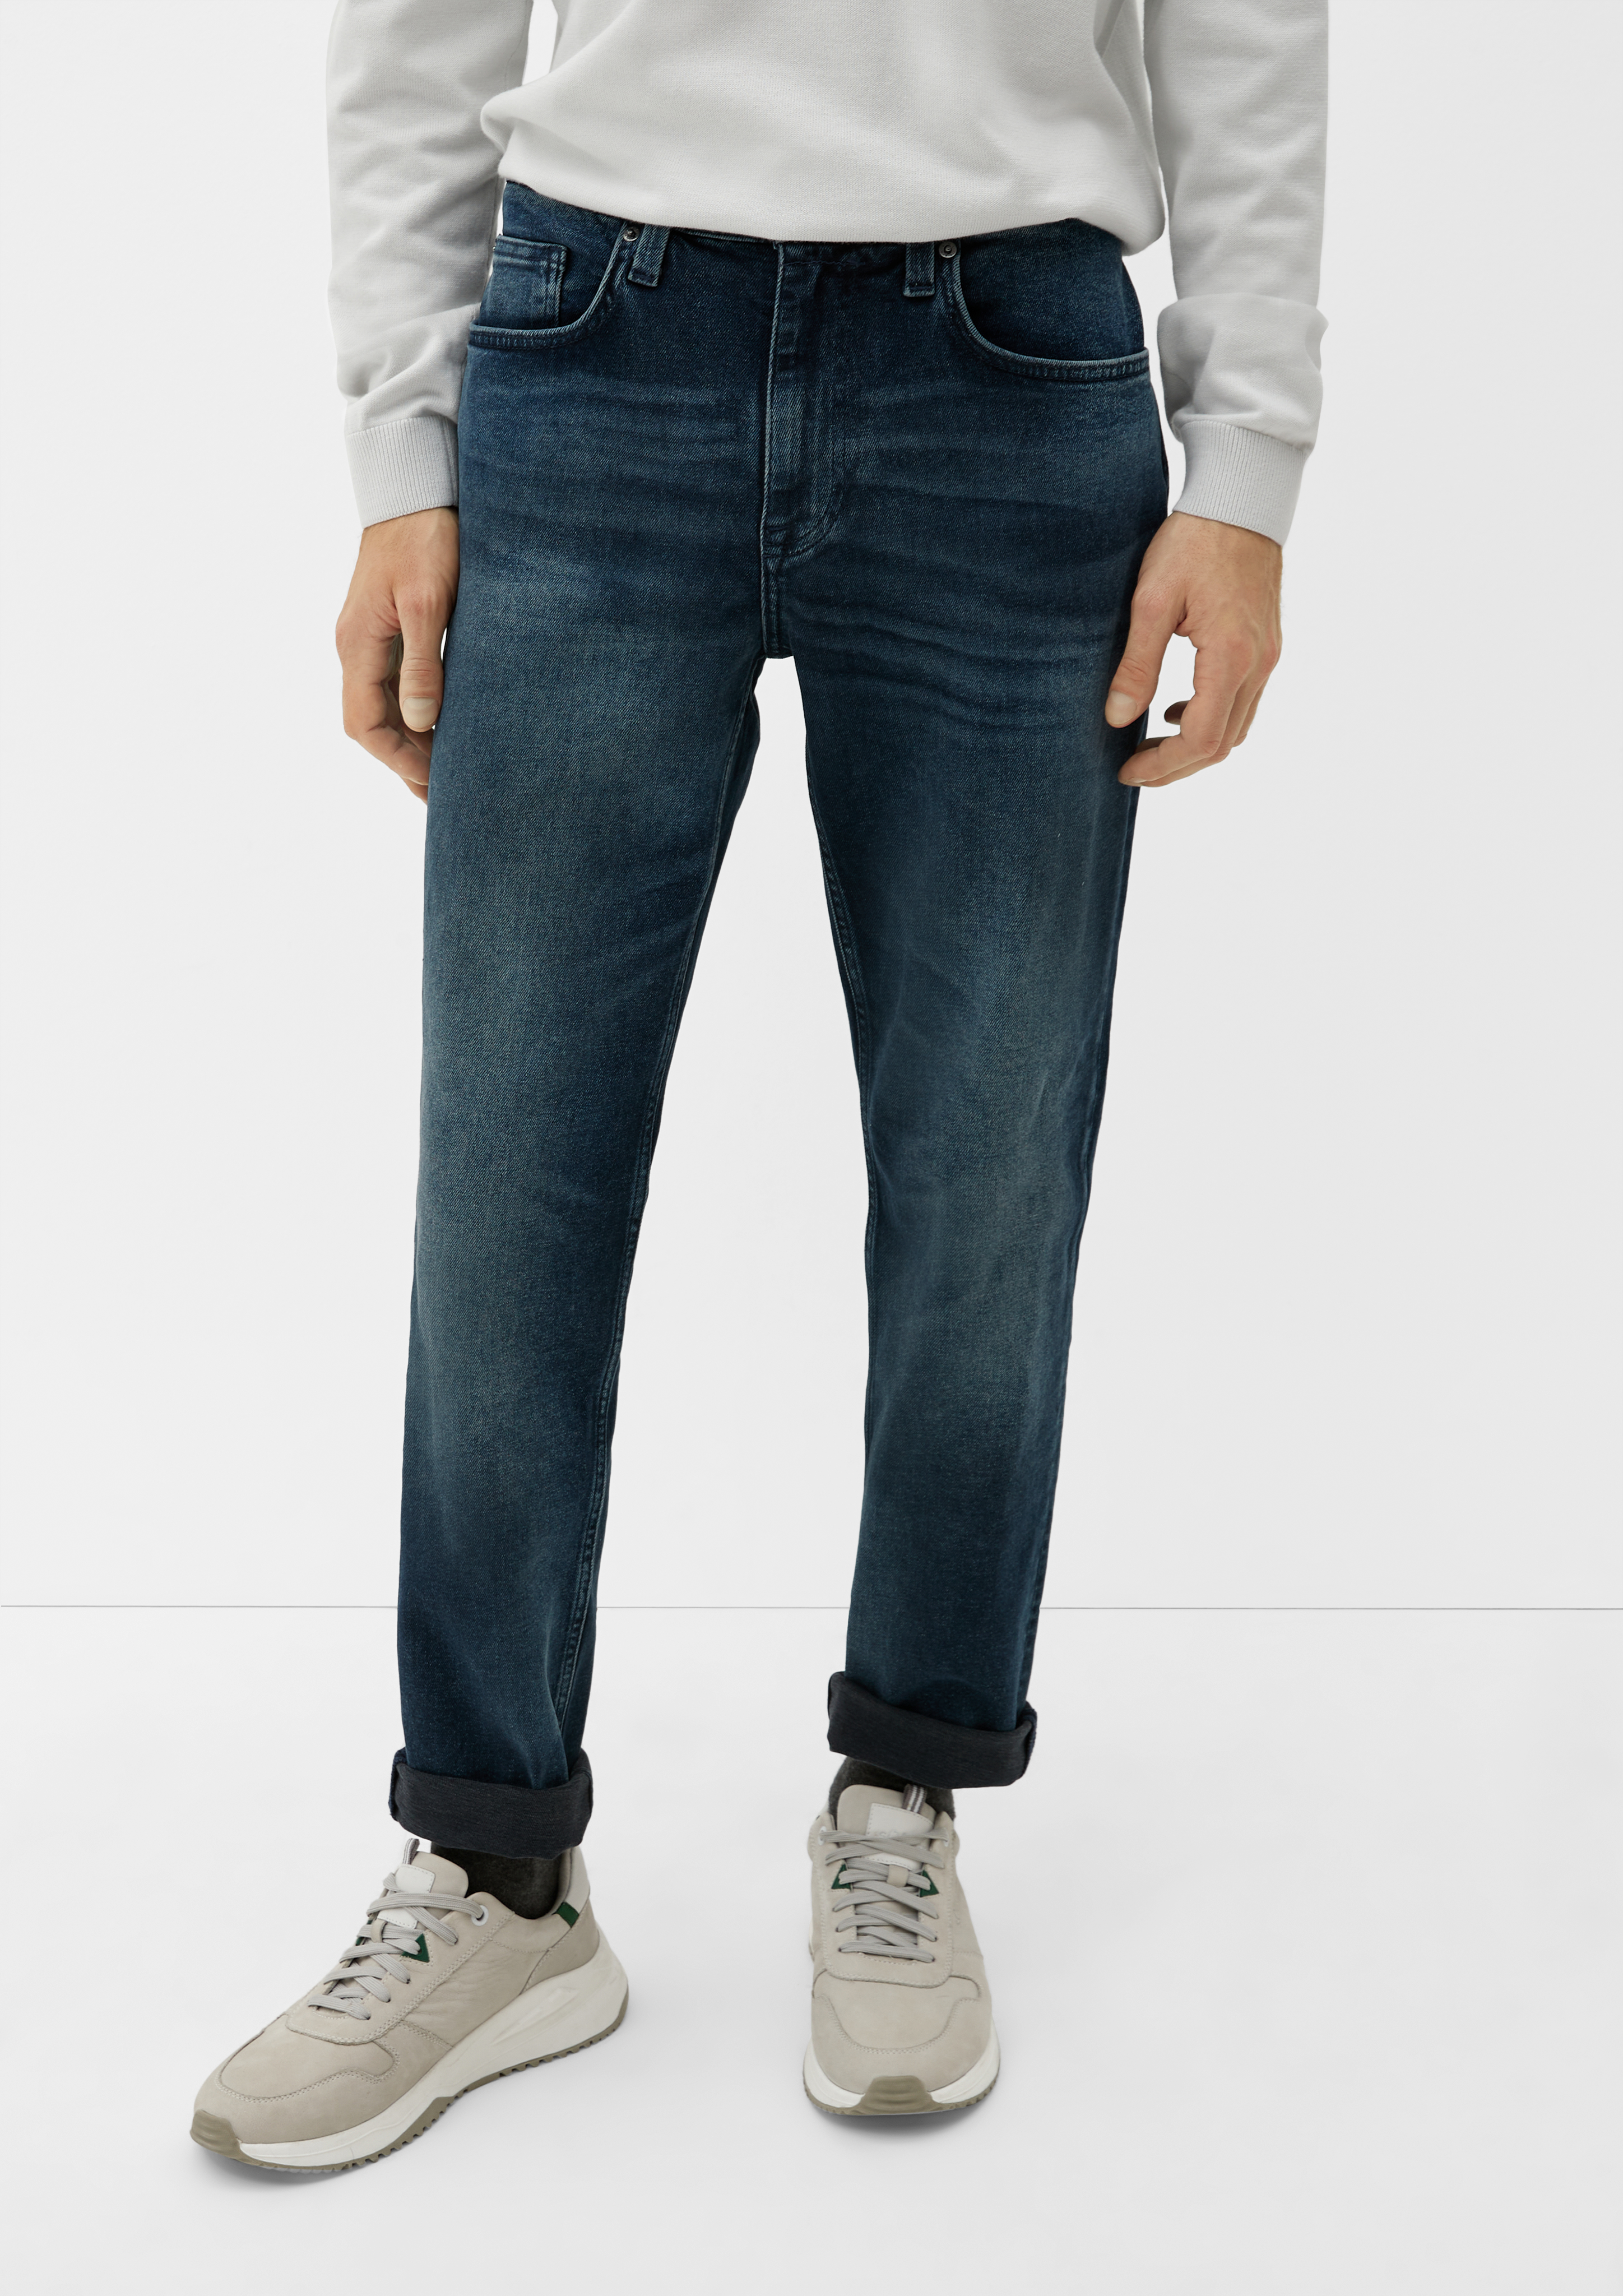 Jeans / High Regular / Fit - tiefblau Leg Rise / Straight